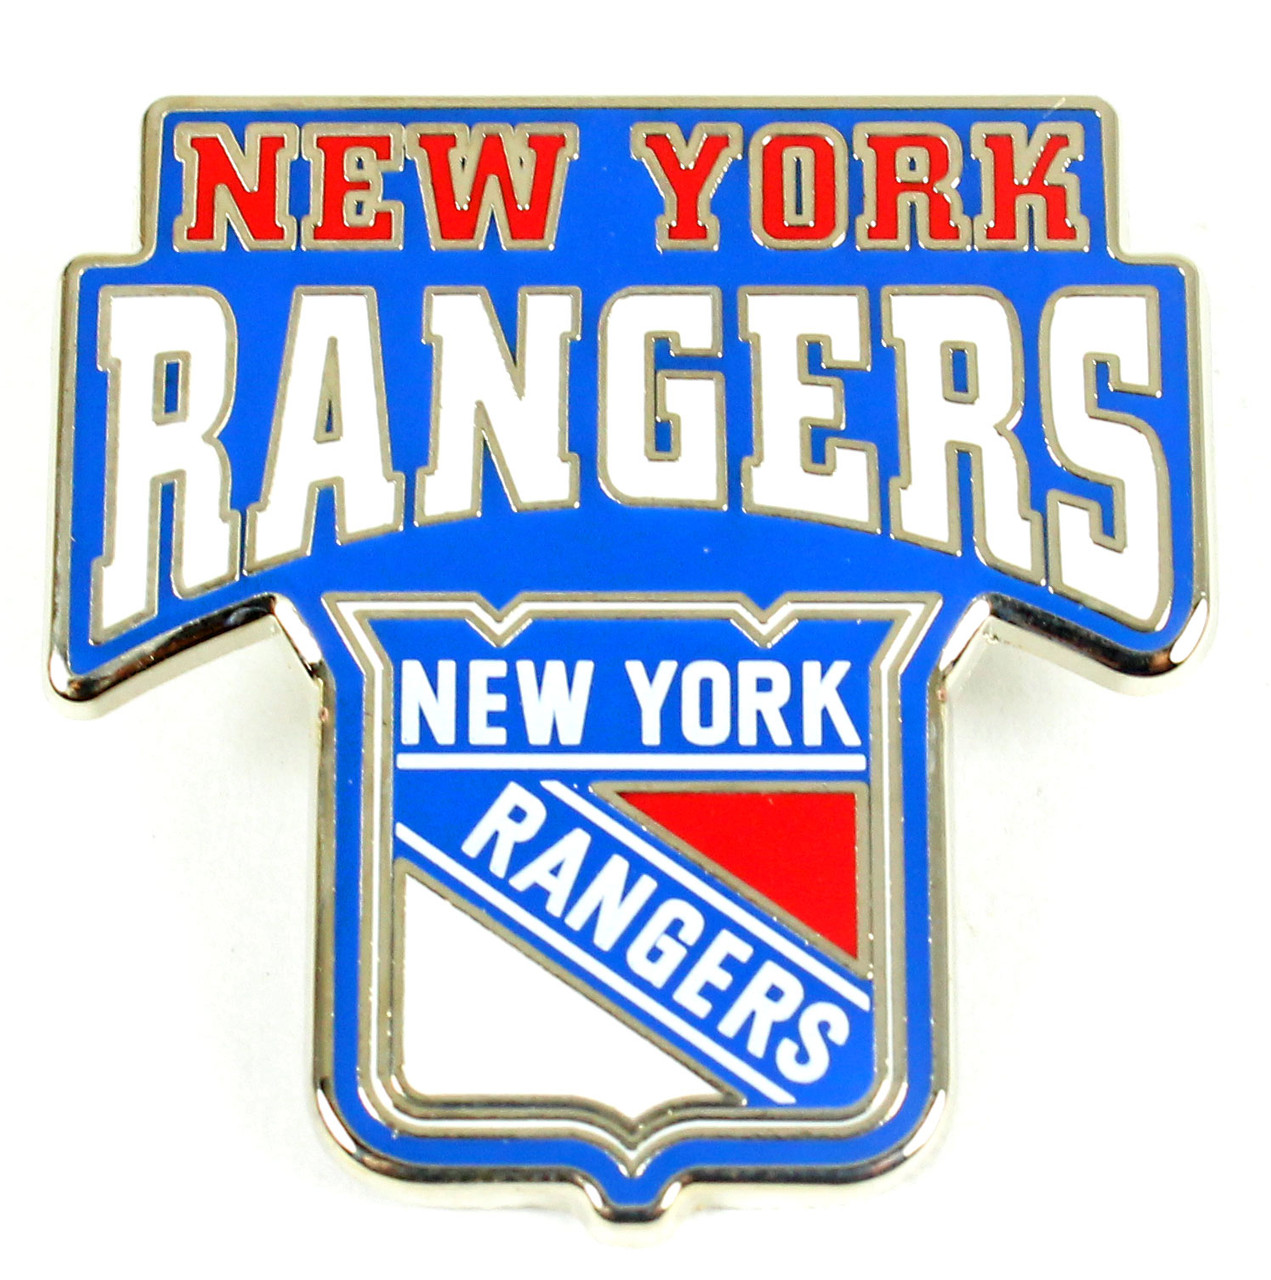 New York Rangers vs. Philadelphia Flyers 2012 NHL Winter Classic National Emblem Jersey Patch